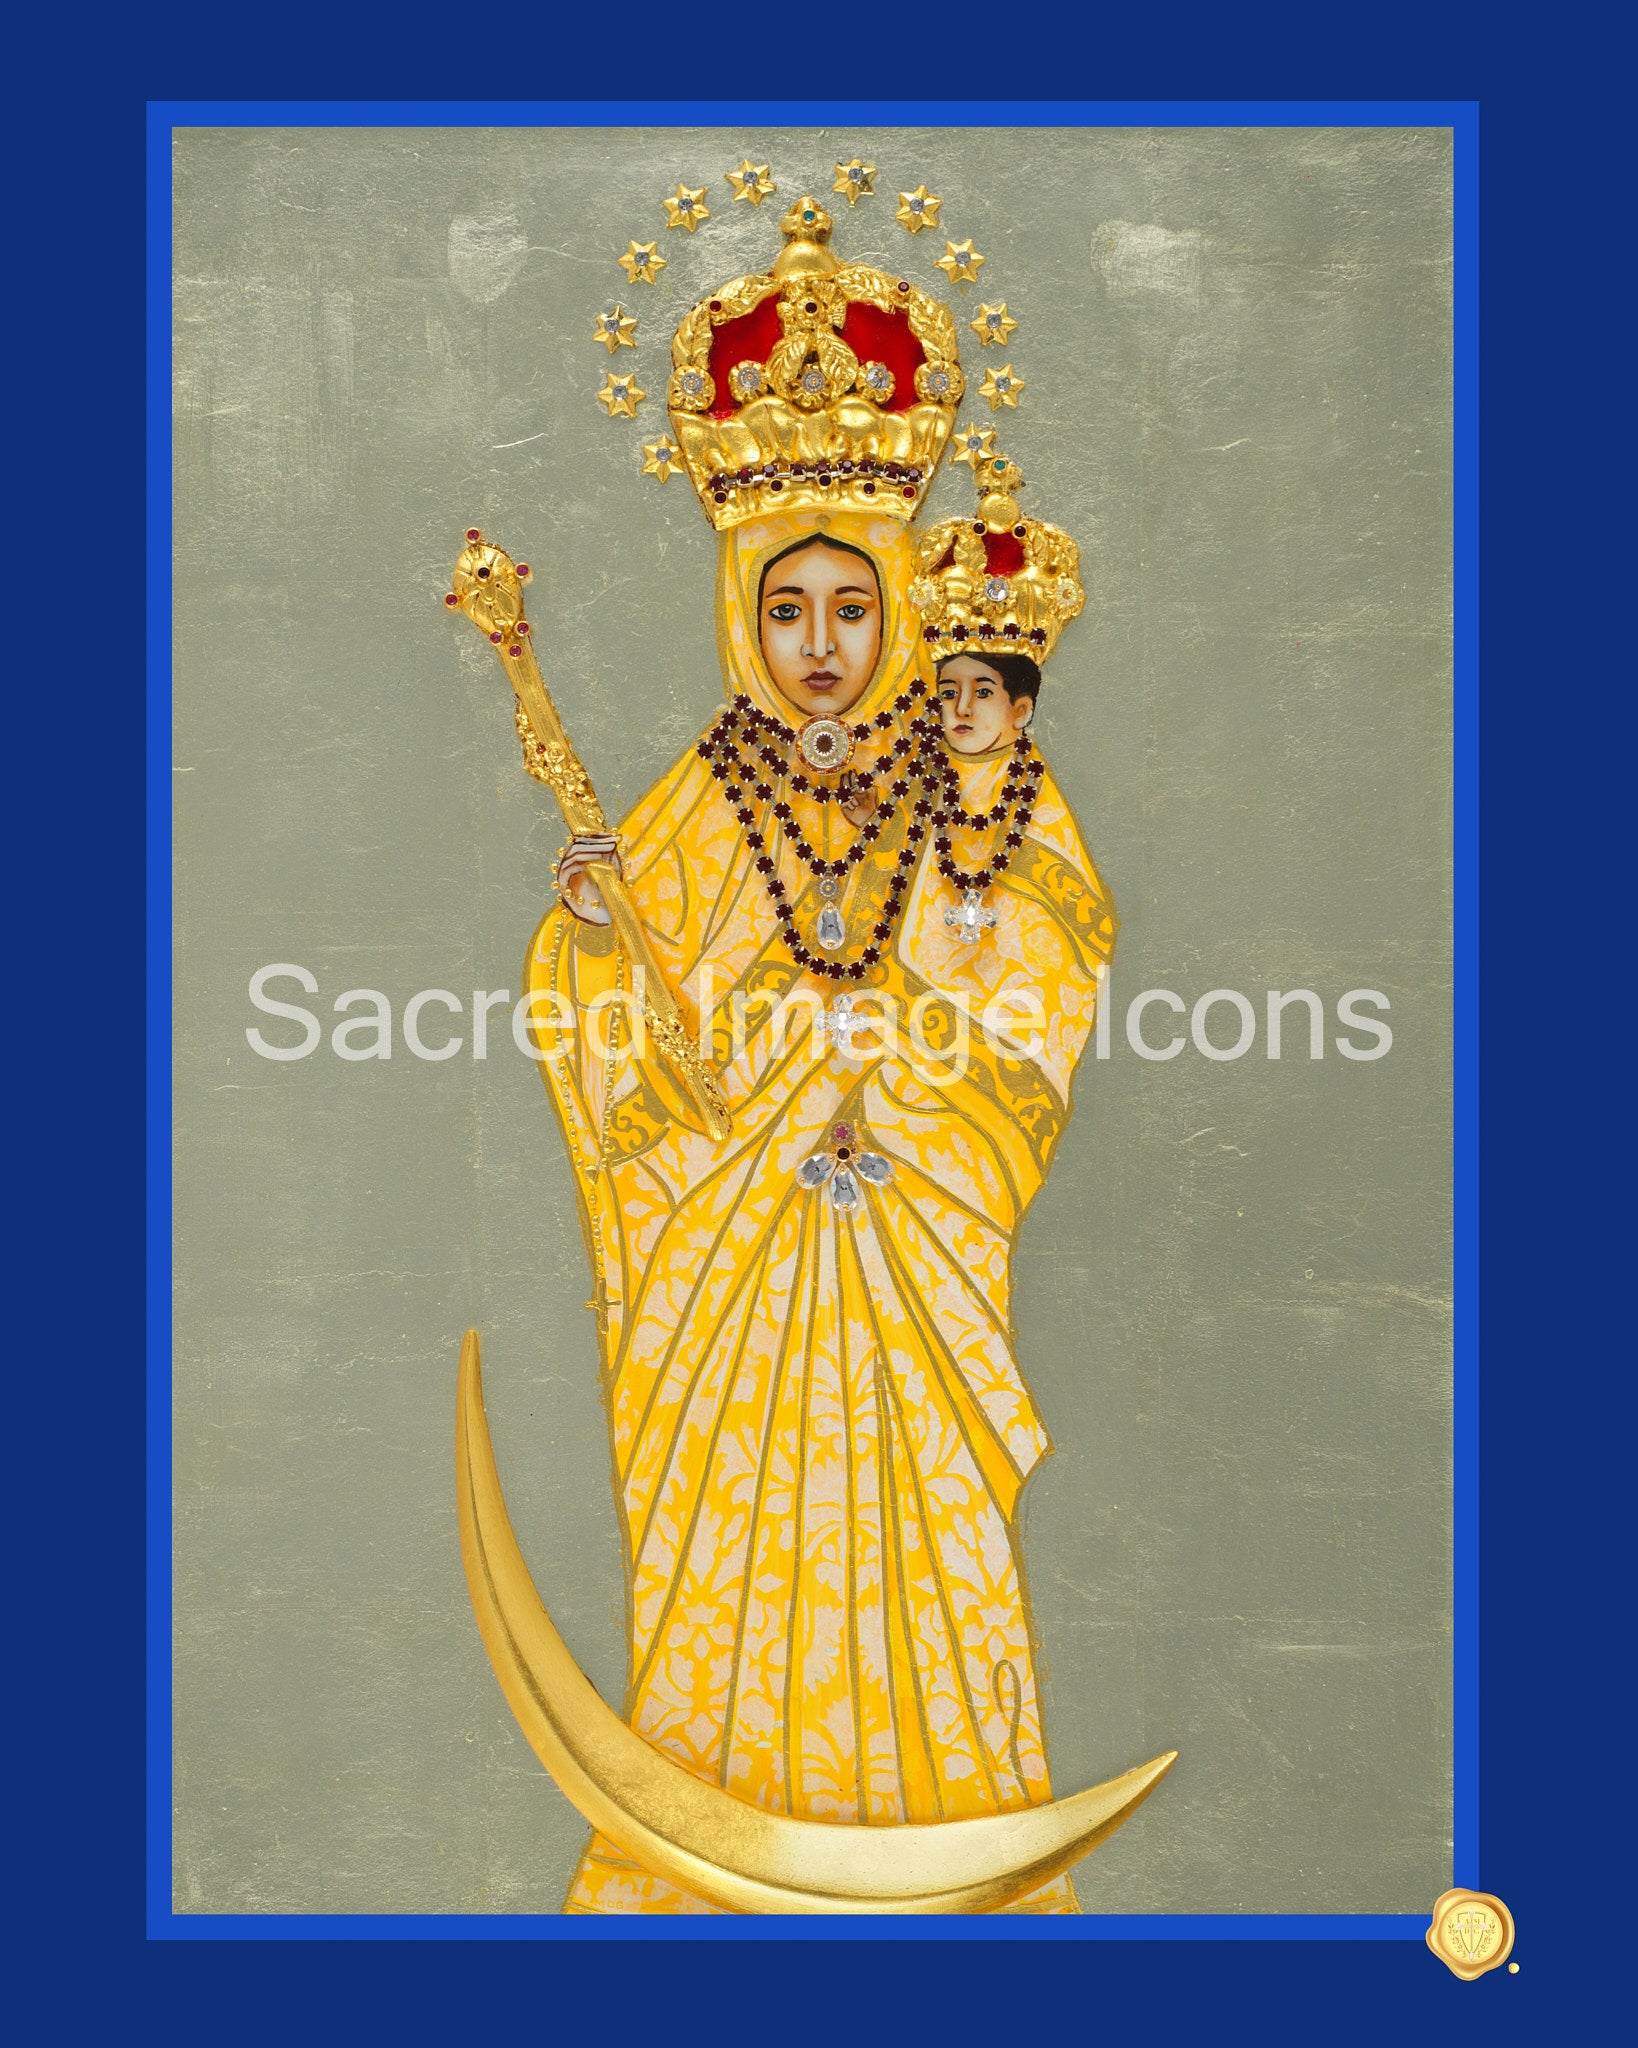 Our Lady of Vailankanni Icon Print